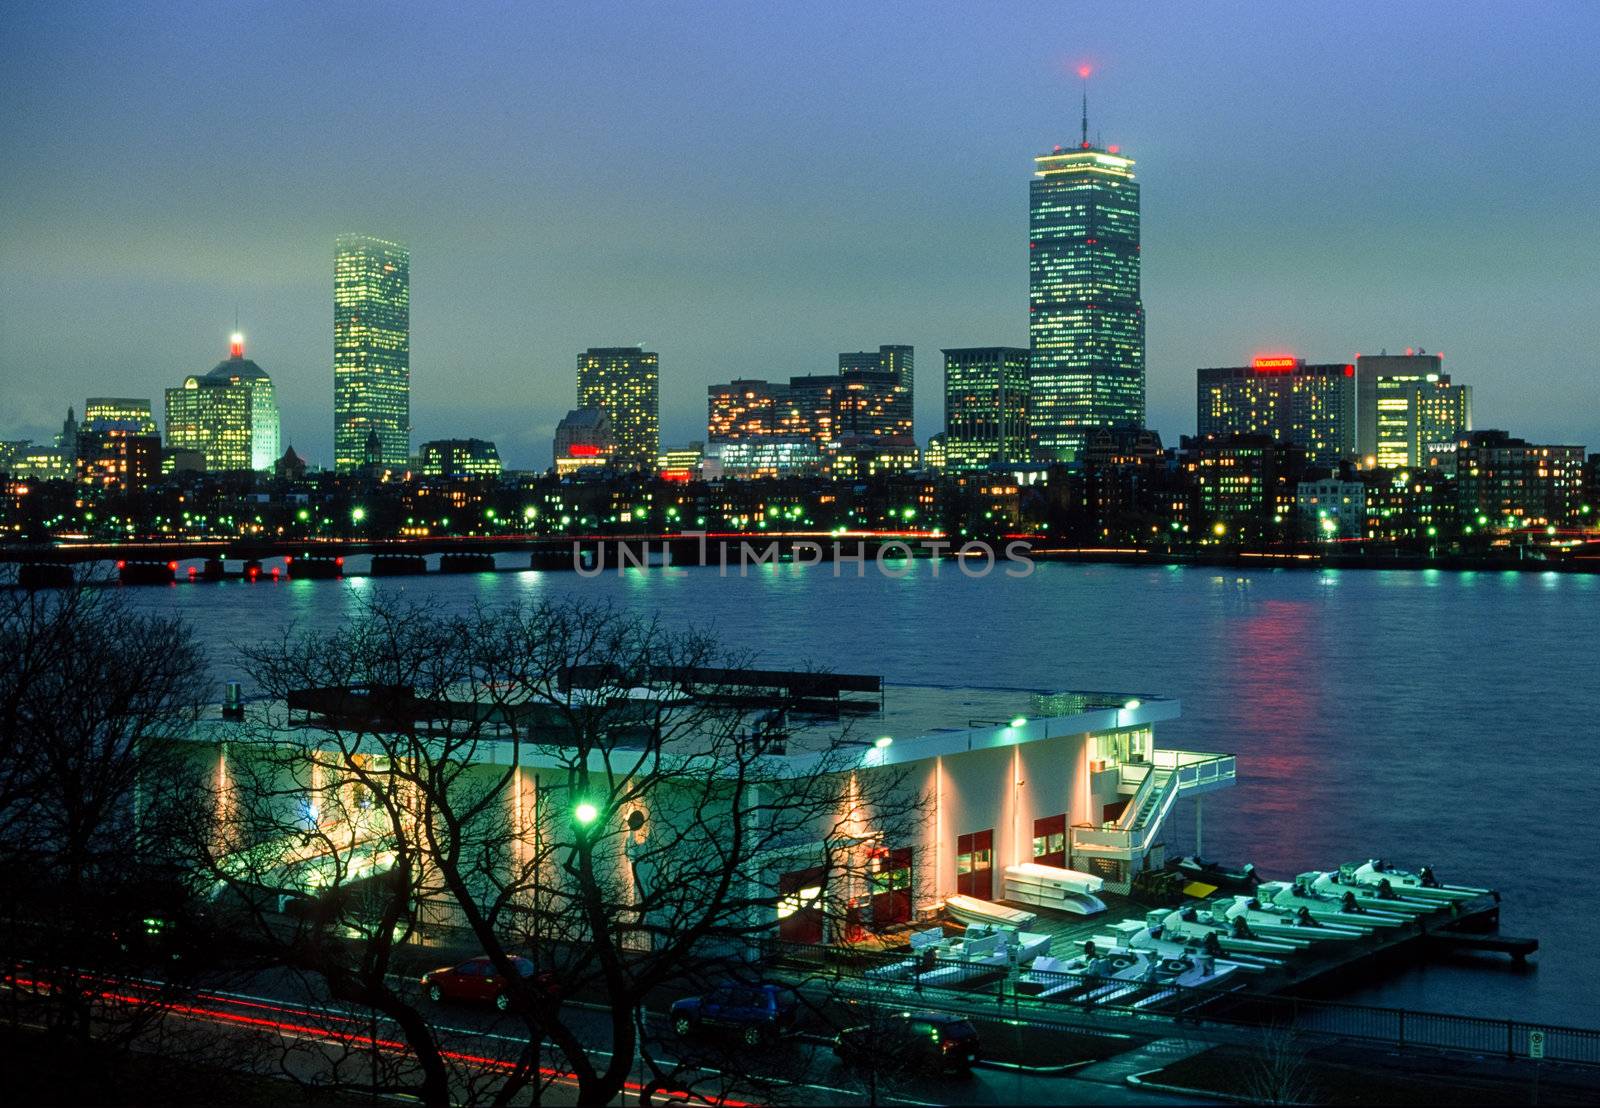 MIT's Pierce Boathouse and Boston's Back Bay